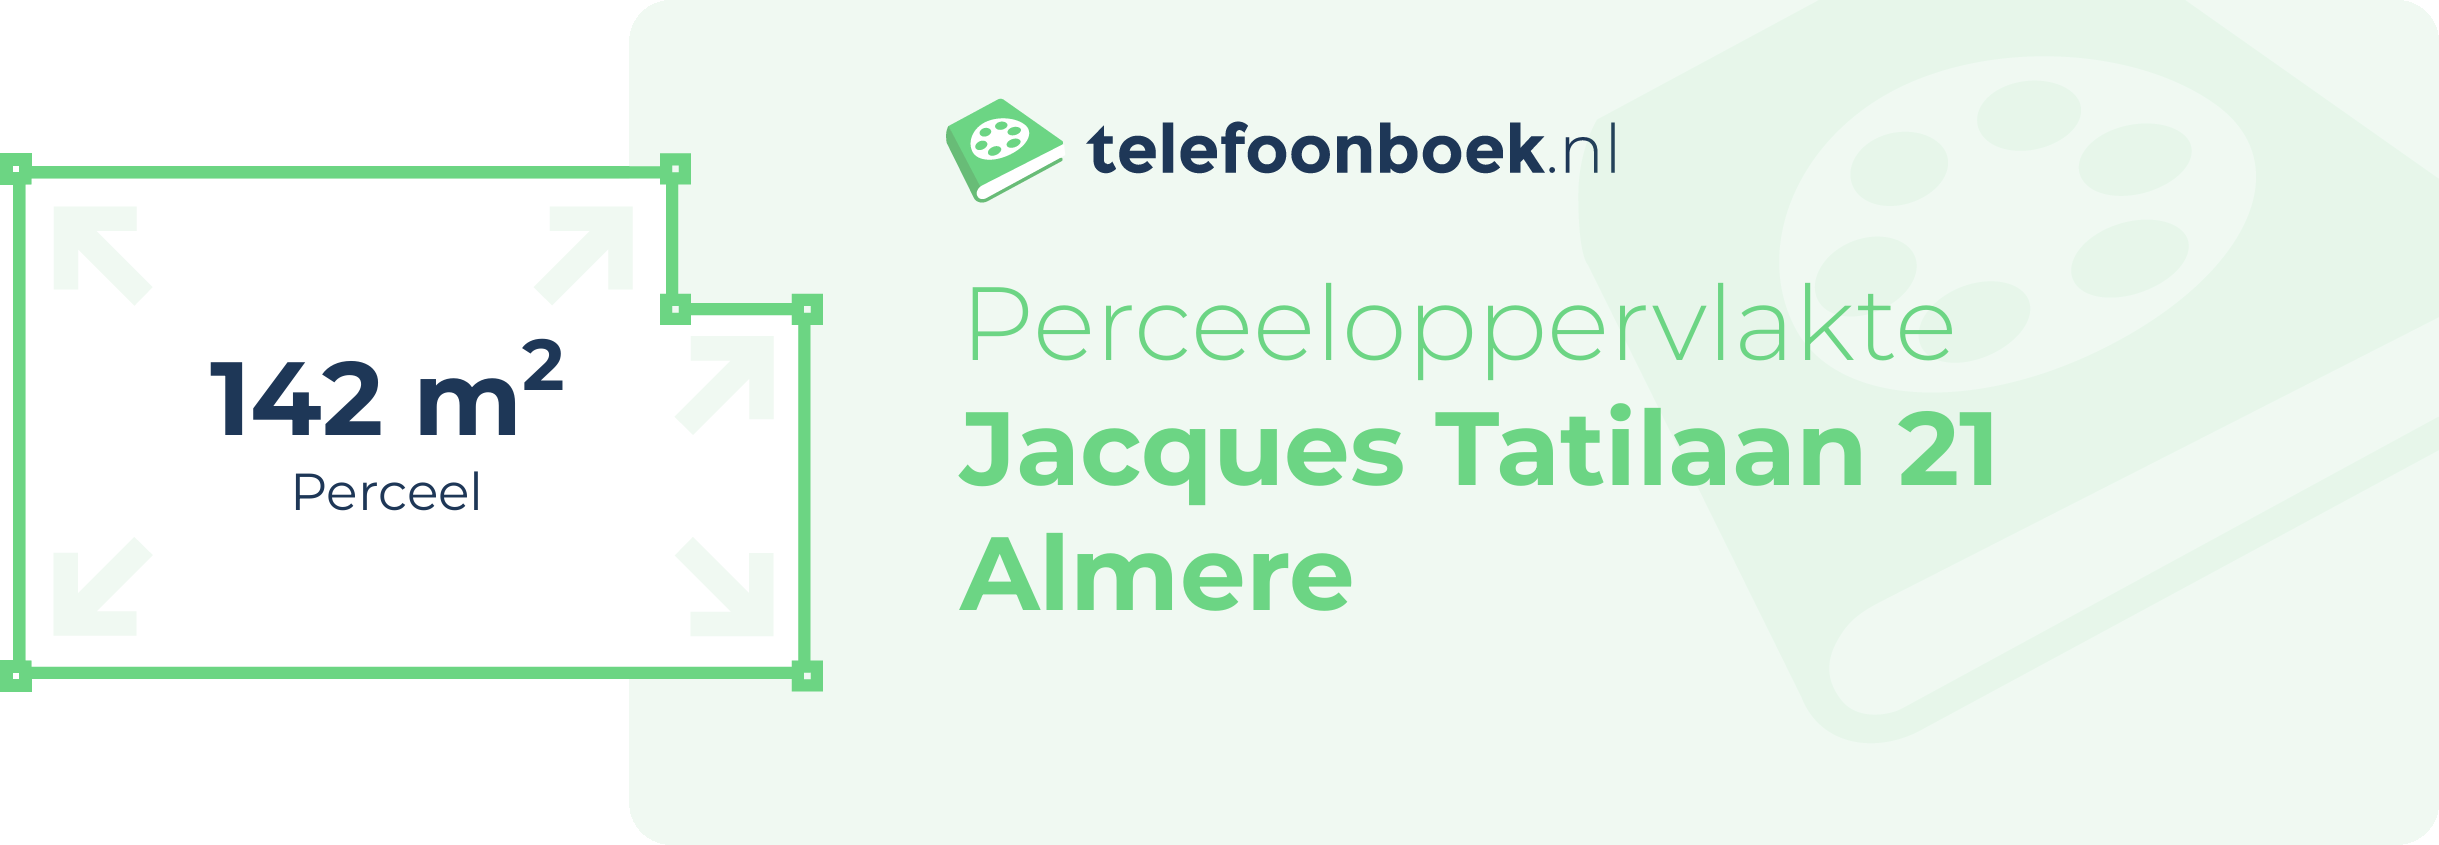 Perceeloppervlakte Jacques Tatilaan 21 Almere